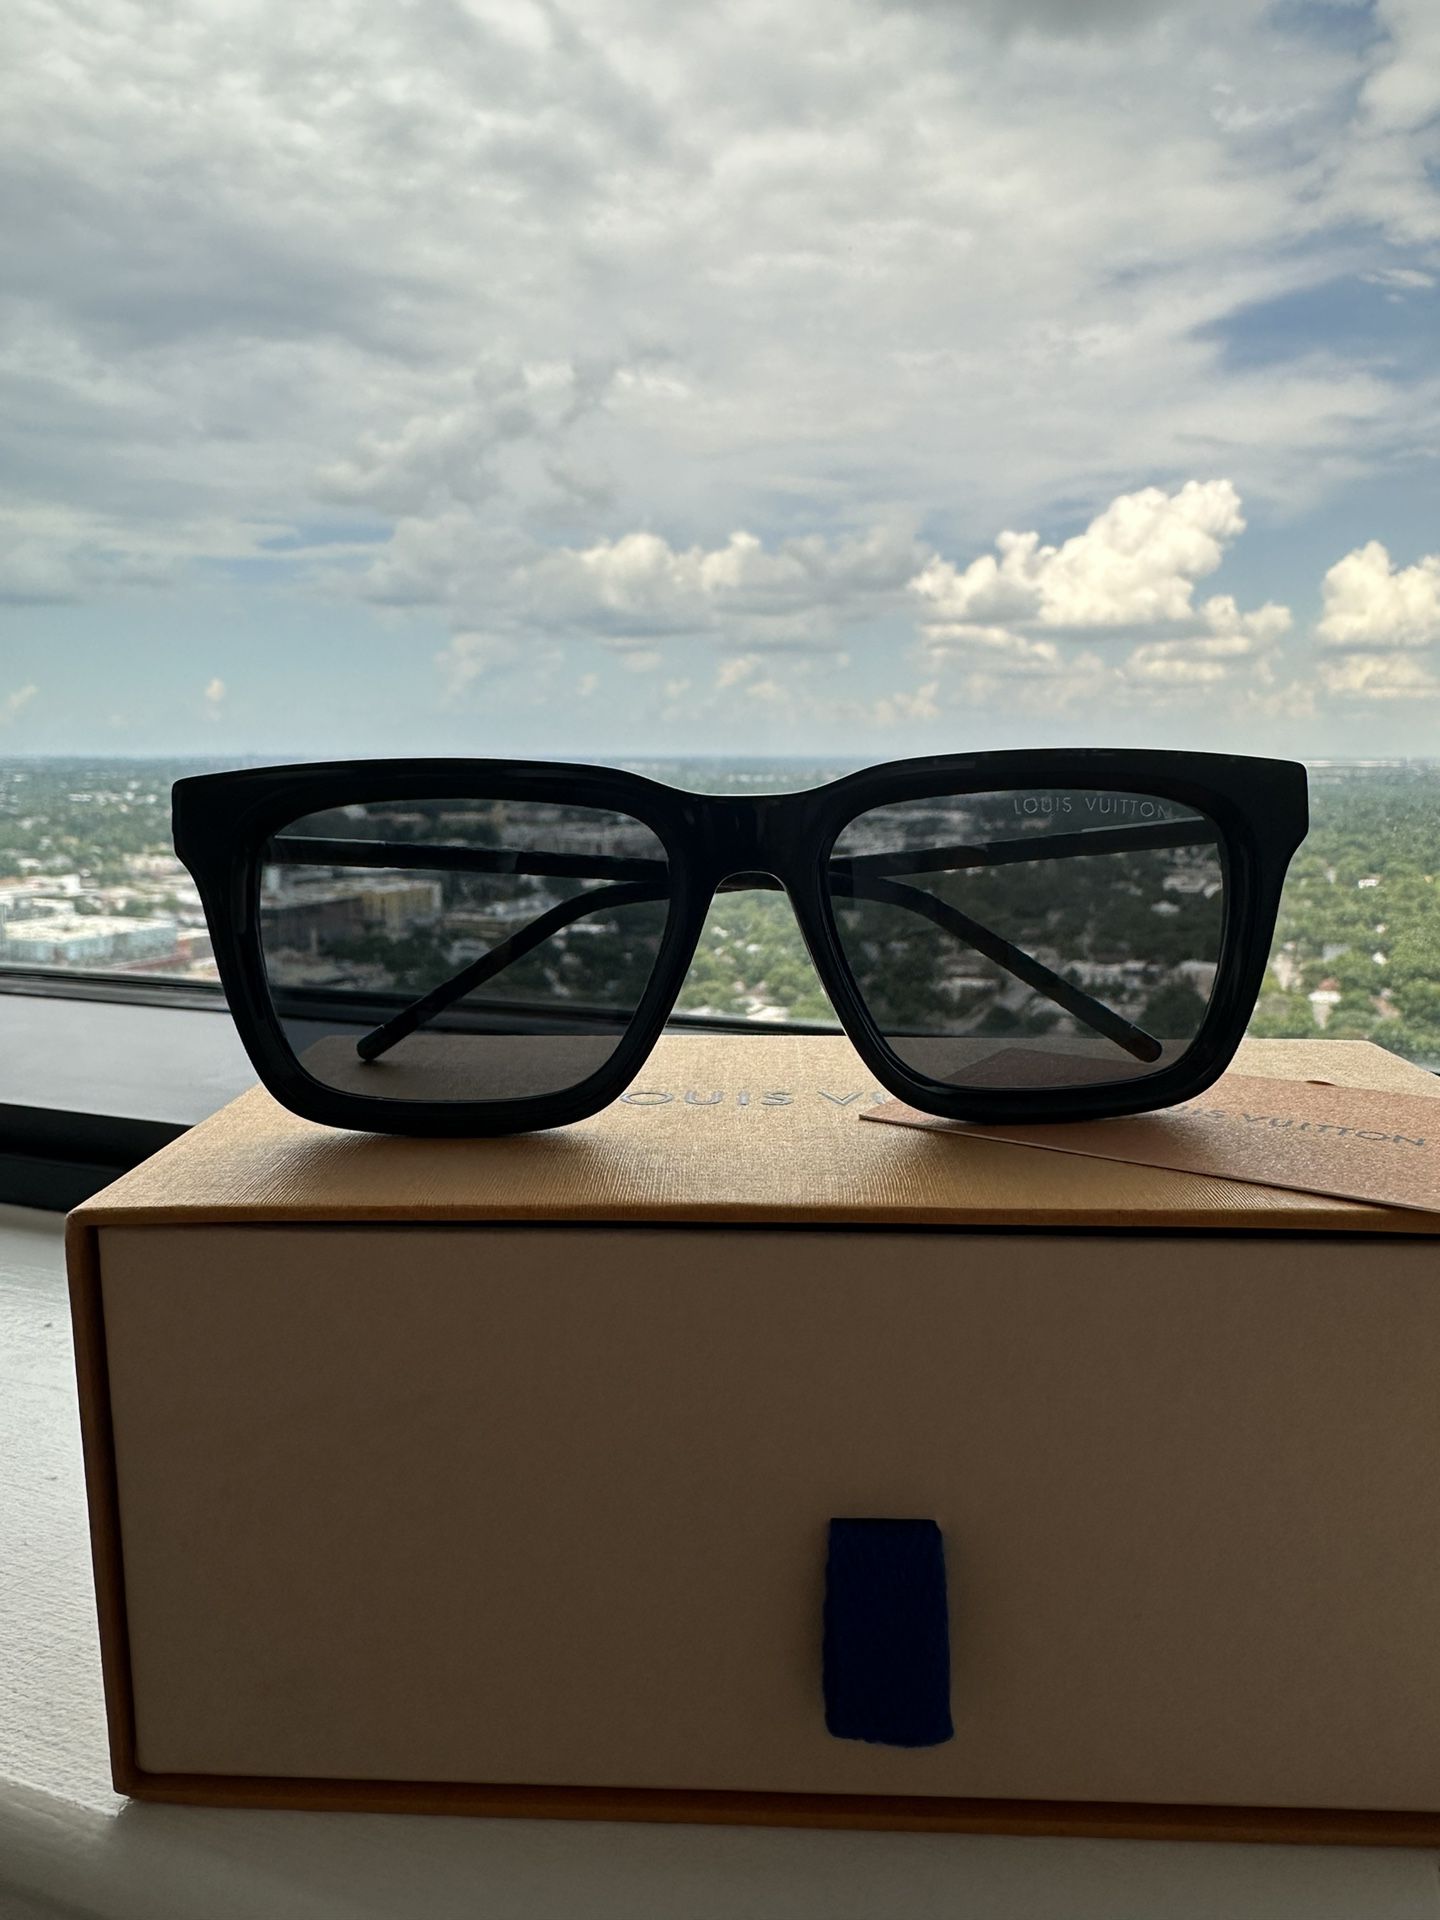 Louis Vuitton - Rainbow Monogram Lens Waimea Sunglasses for Sale in Alta  Loma, TX - OfferUp